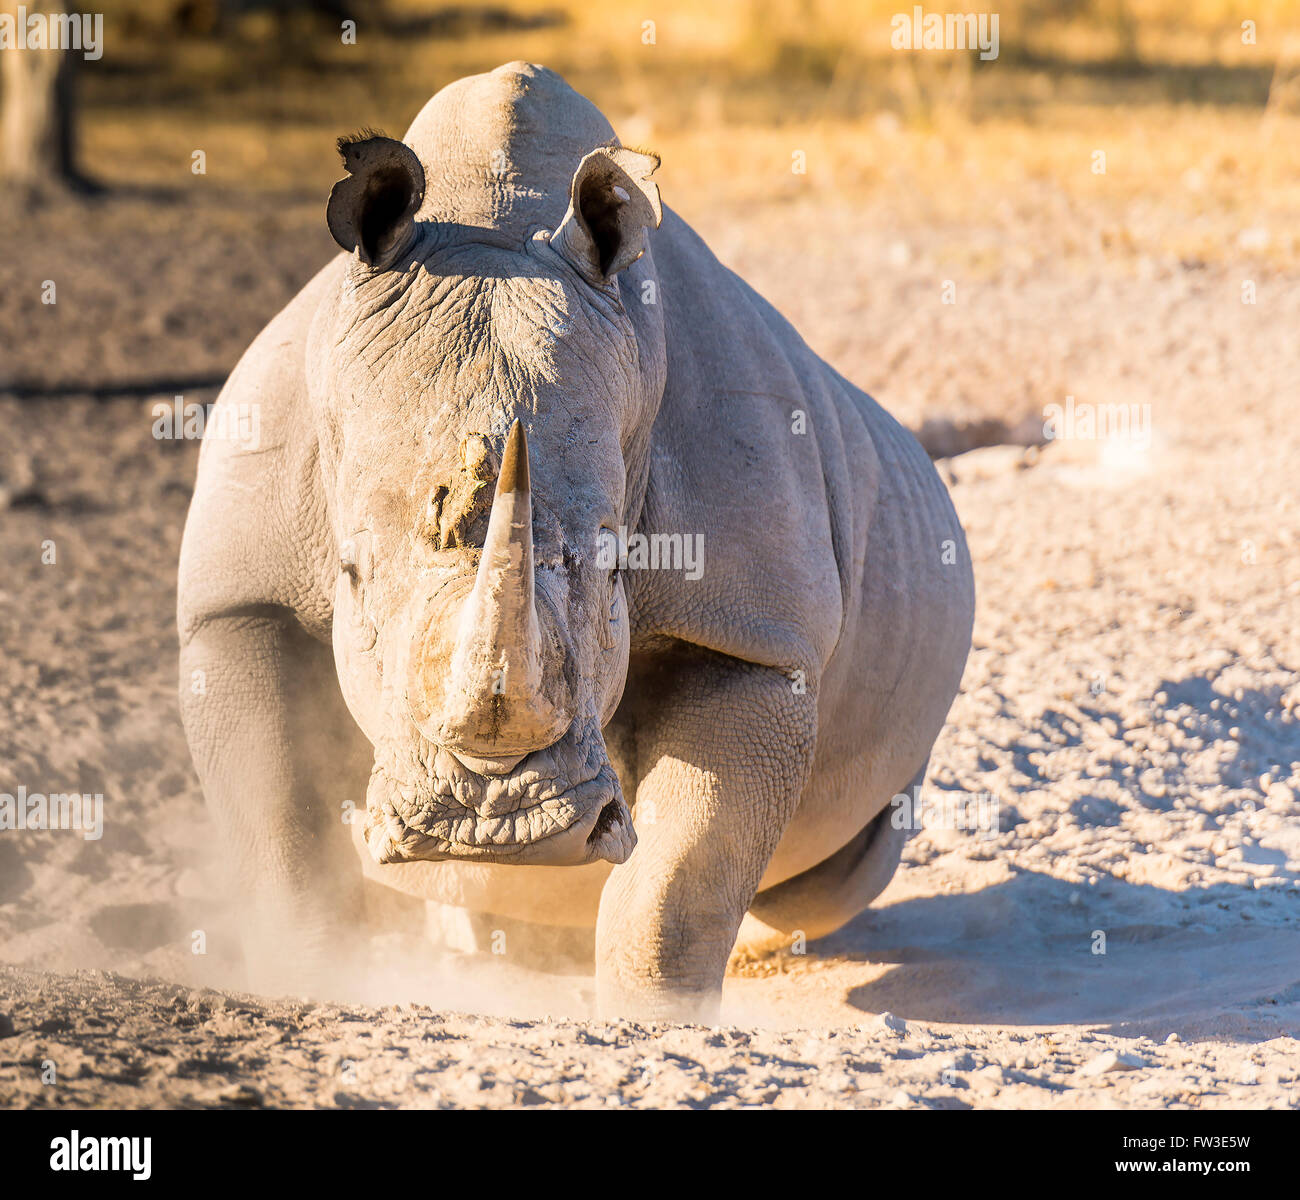 White Rhino or Rhinoceros looking angry while on safari in Botswana, Africa Stock Photo